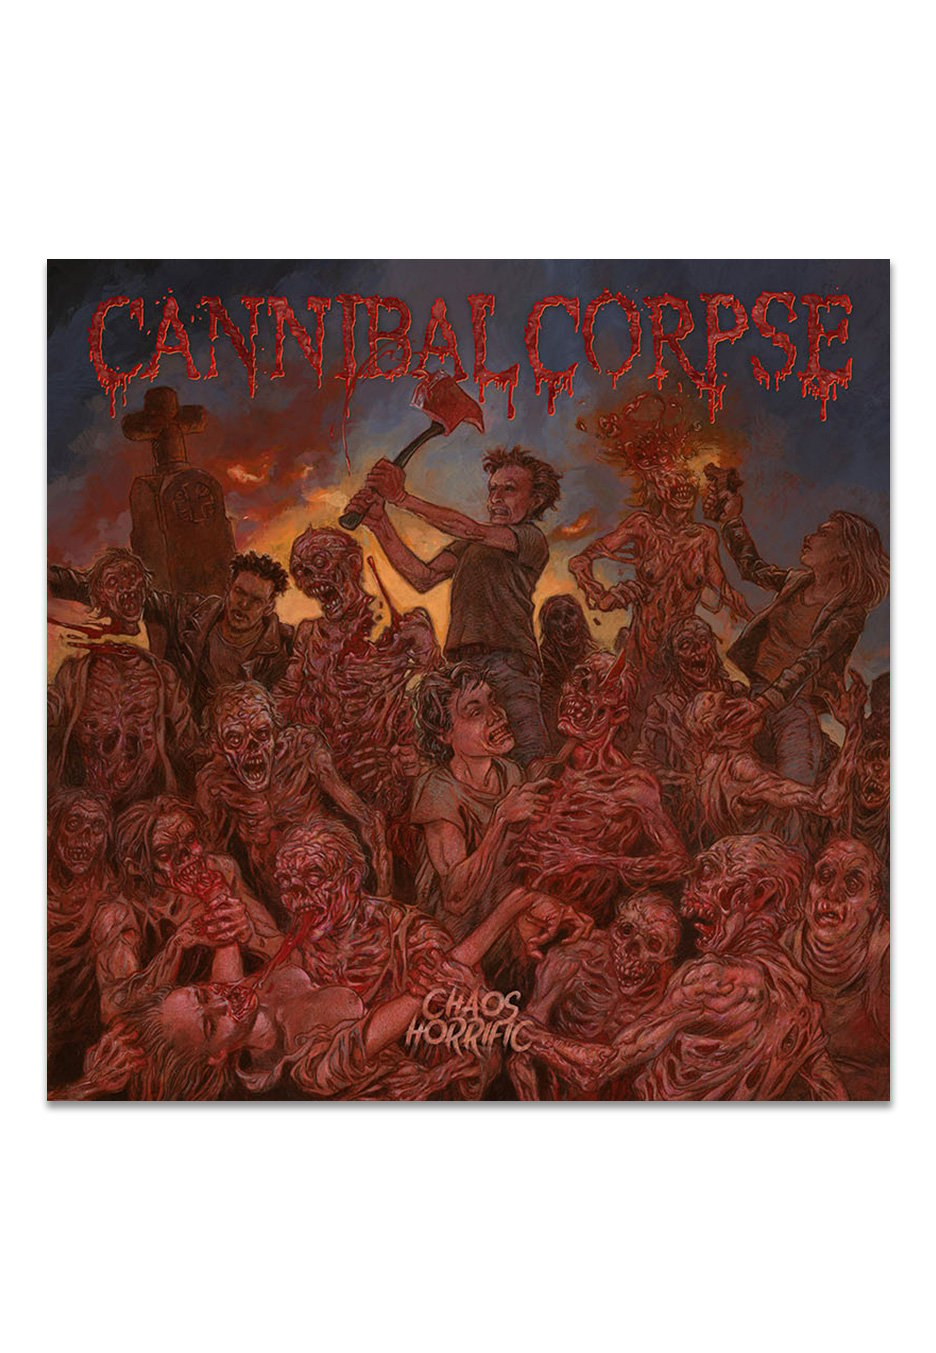 Cannibal Corpse - Chaos Horrific - Digipak CD